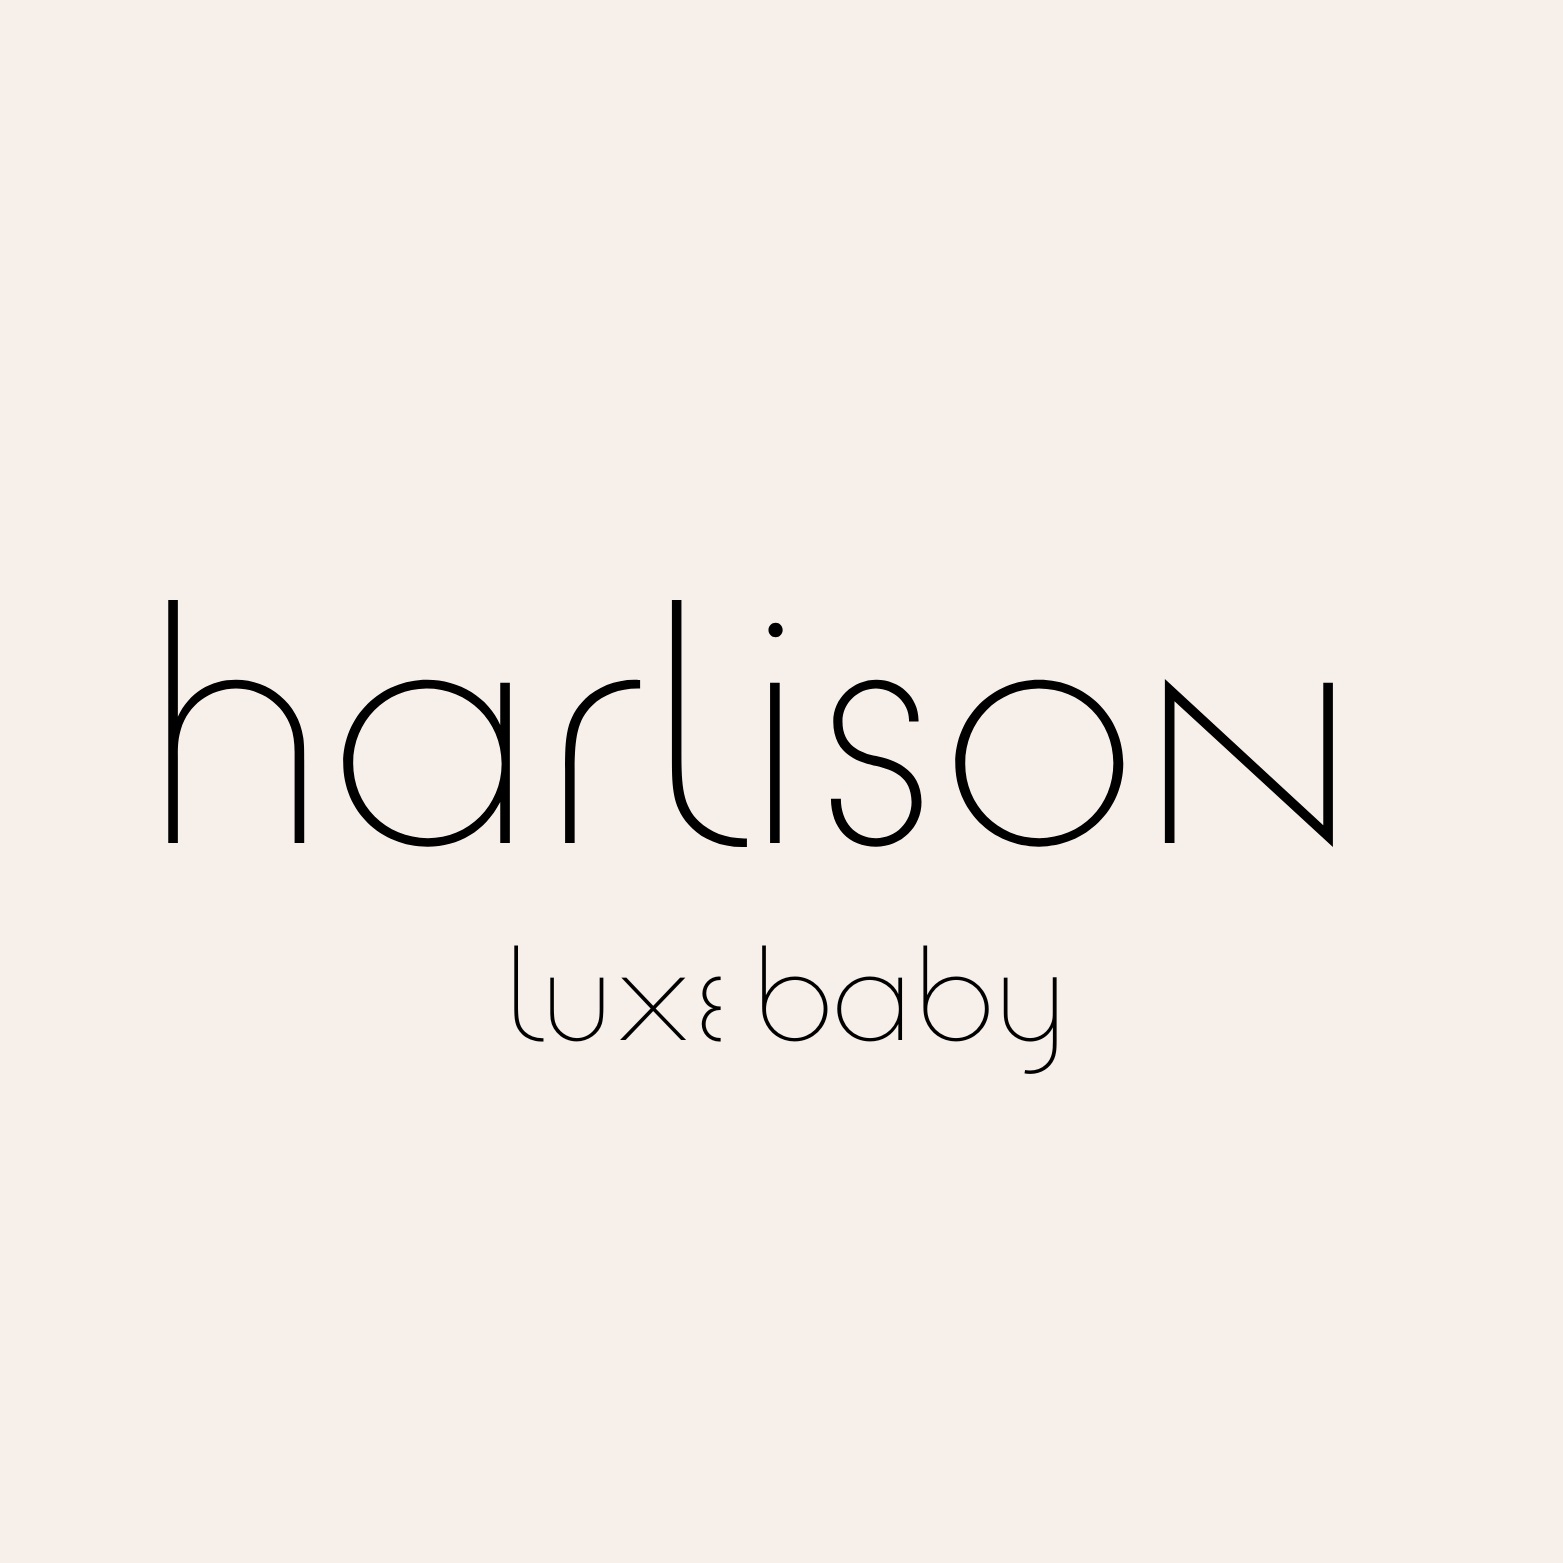 Harlison UK Ltd